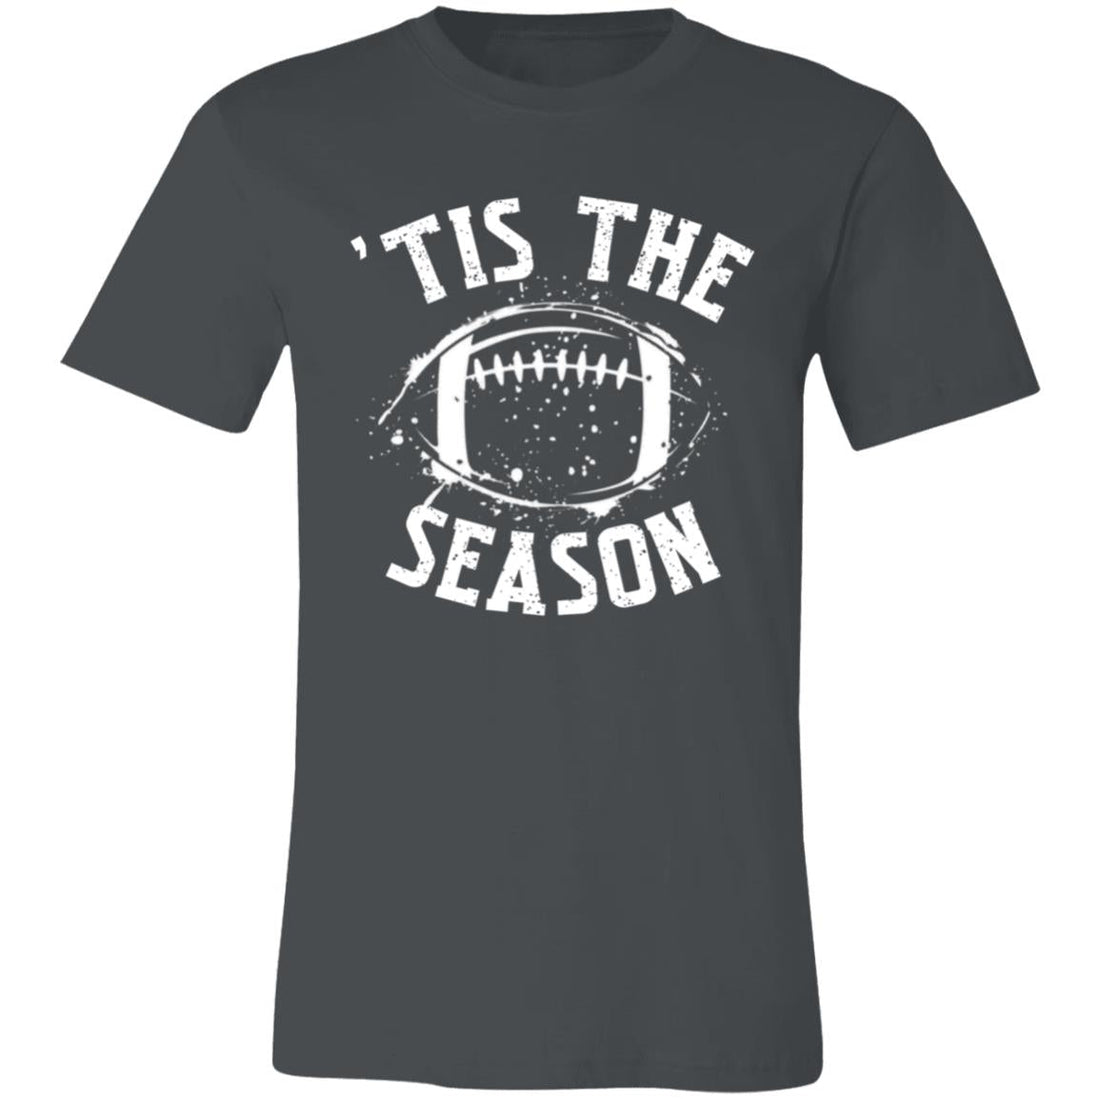 Tis The Season Football Short-Sleeve T-Shirt - T-Shirts - Positively Sassy - Tis The Season Football Short-Sleeve T-Shirt